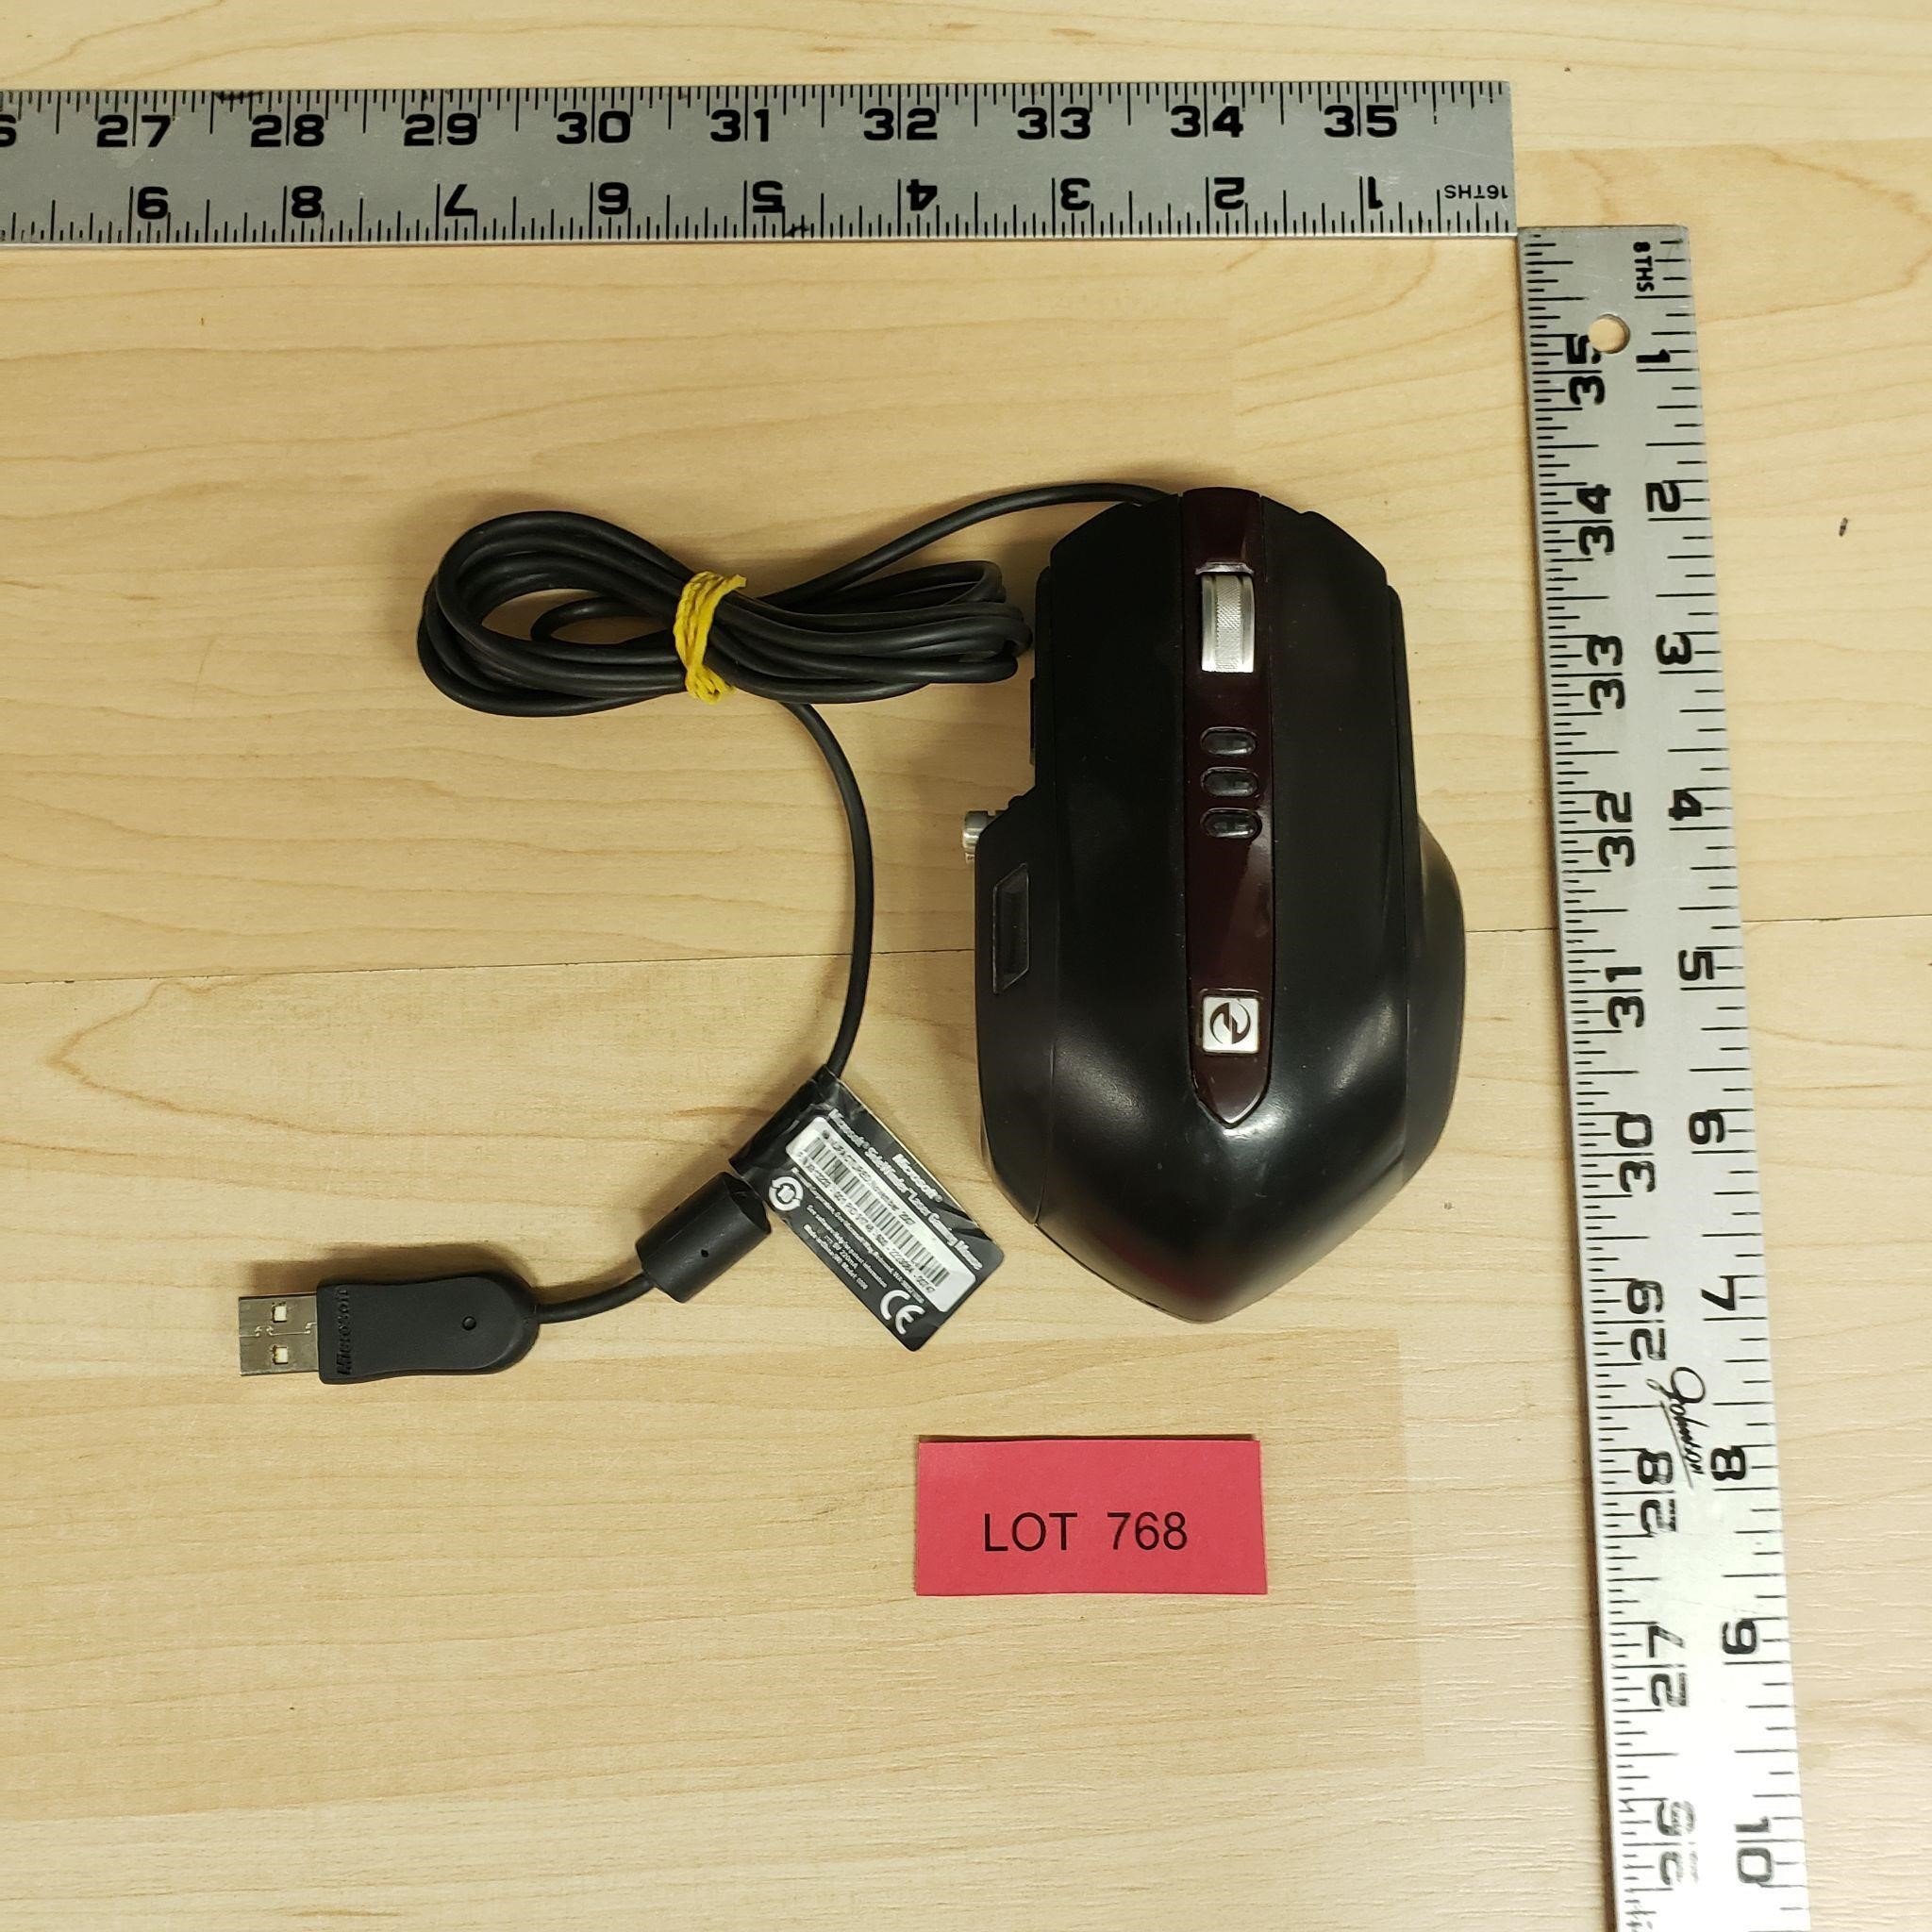 Microsoft Sidewinder Gaming Mouse 2007